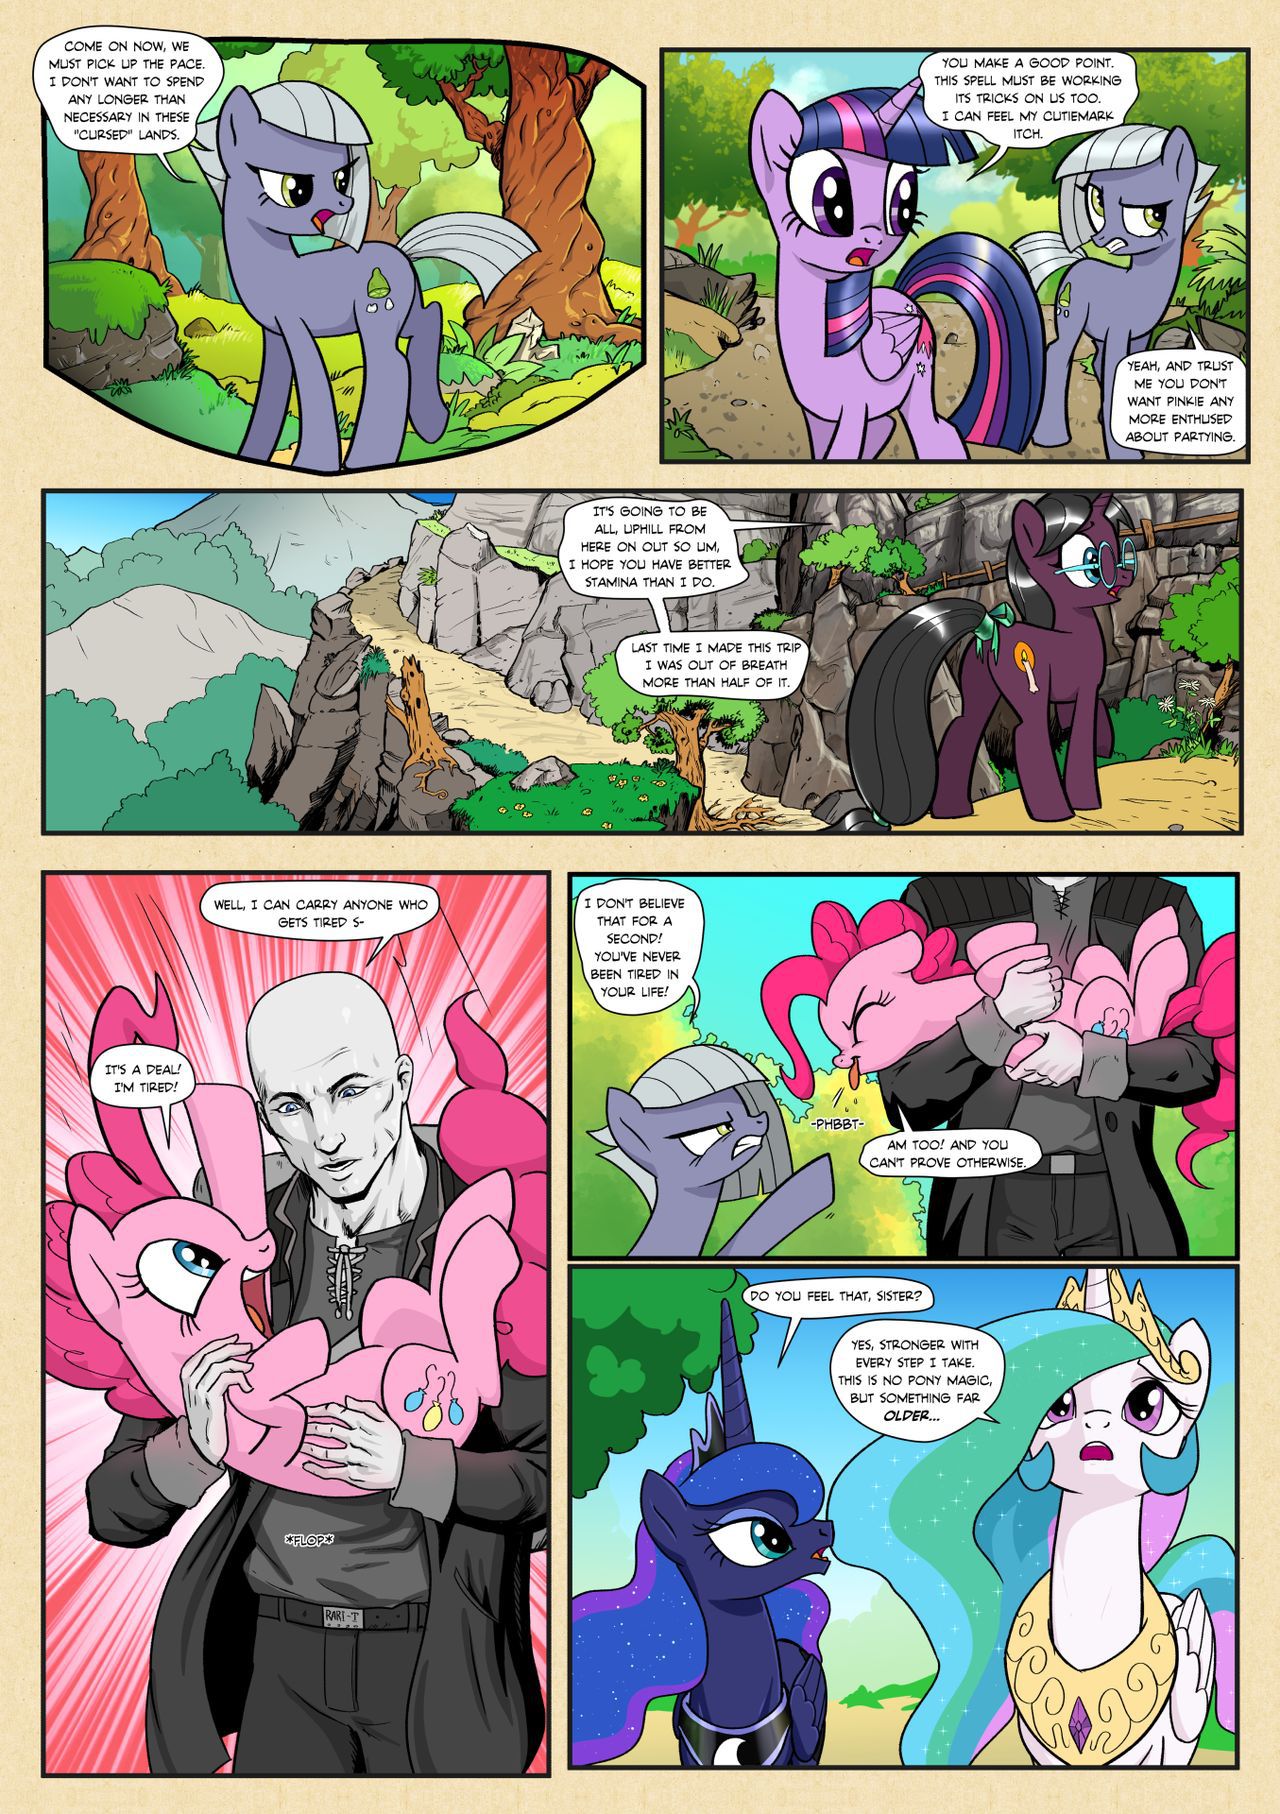 [Pencils] Anon's Pie Adventures (My Little Pony: Friendship is Magic) [In-Progress] 225